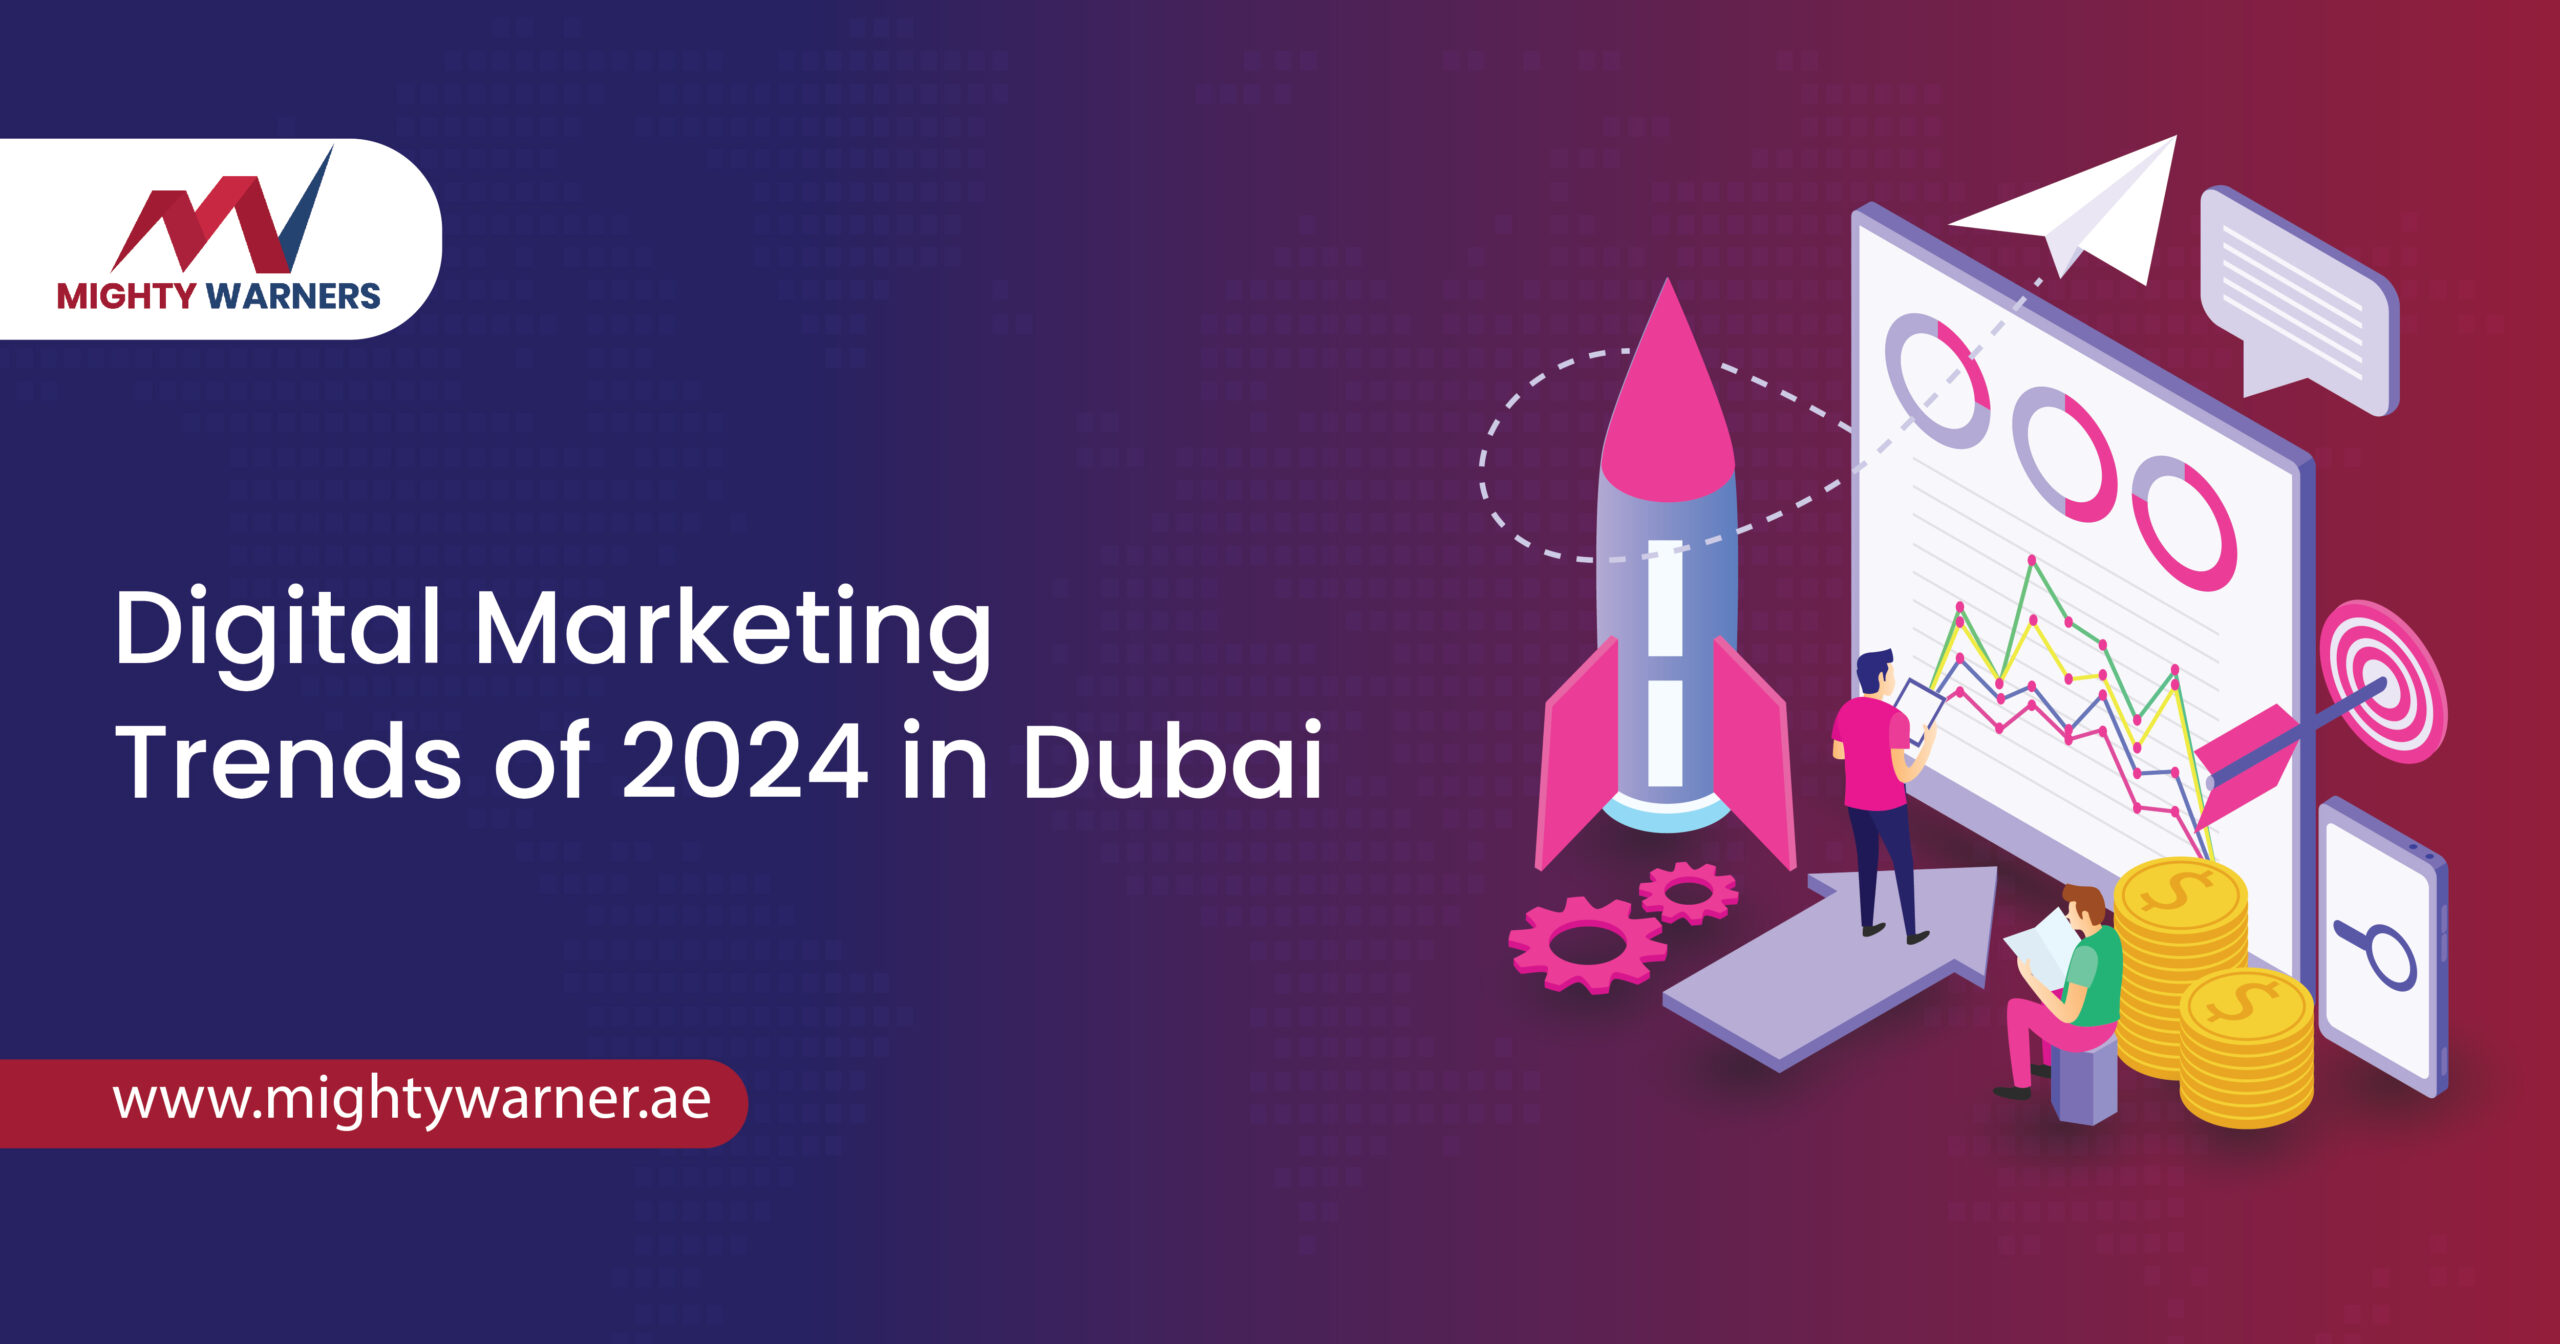 Digital Marketing Trends of 2024 in Dubai